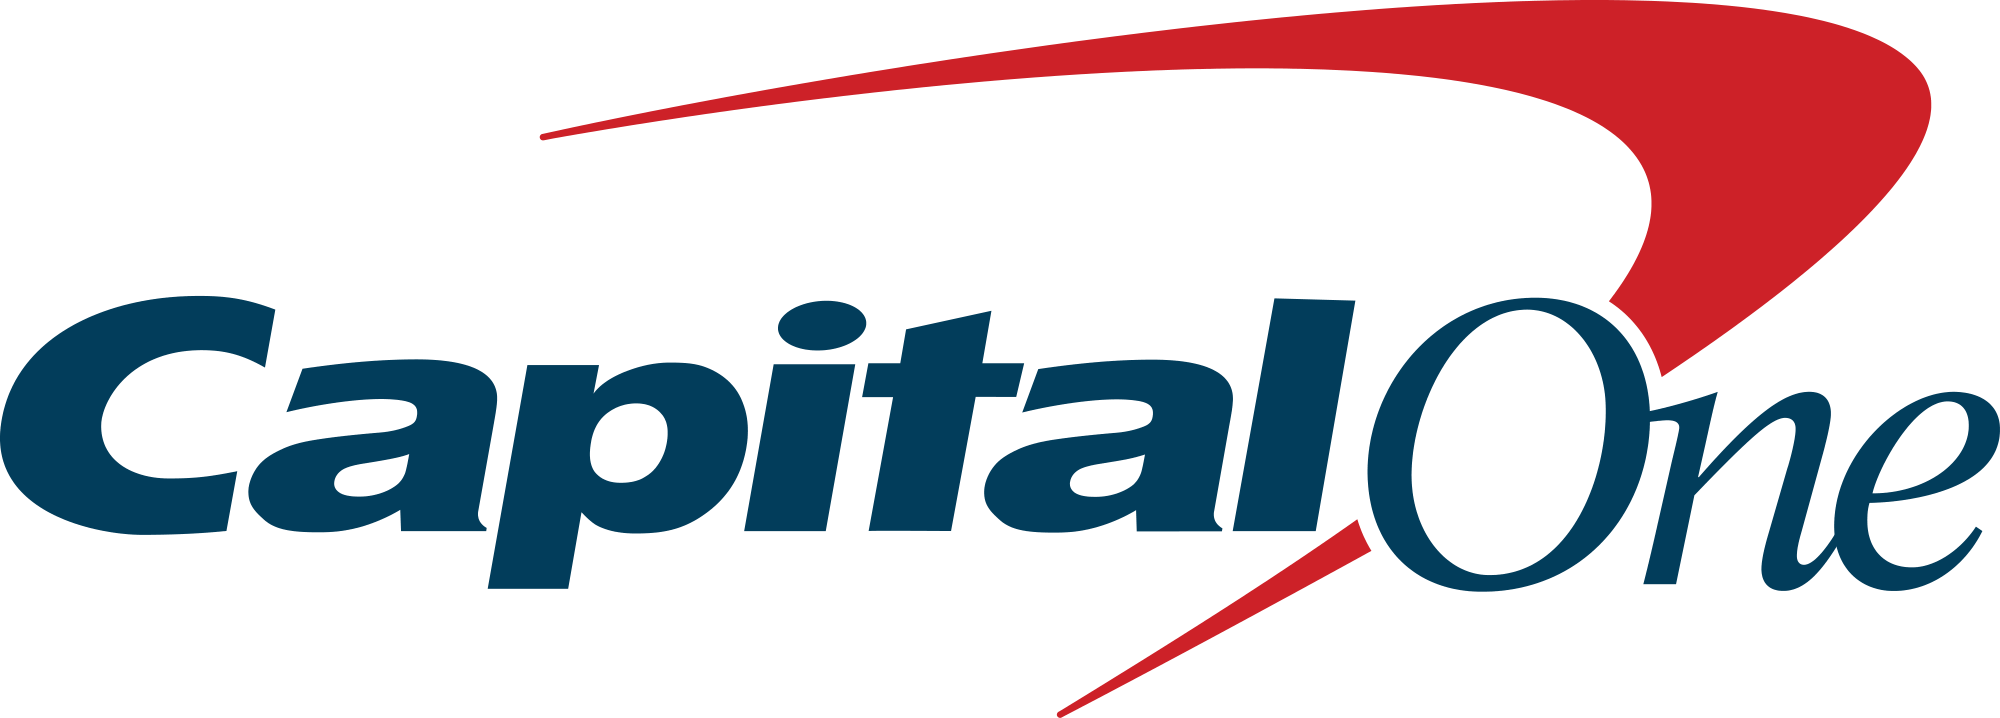 Capital One Enterprise Logo Jan 2021